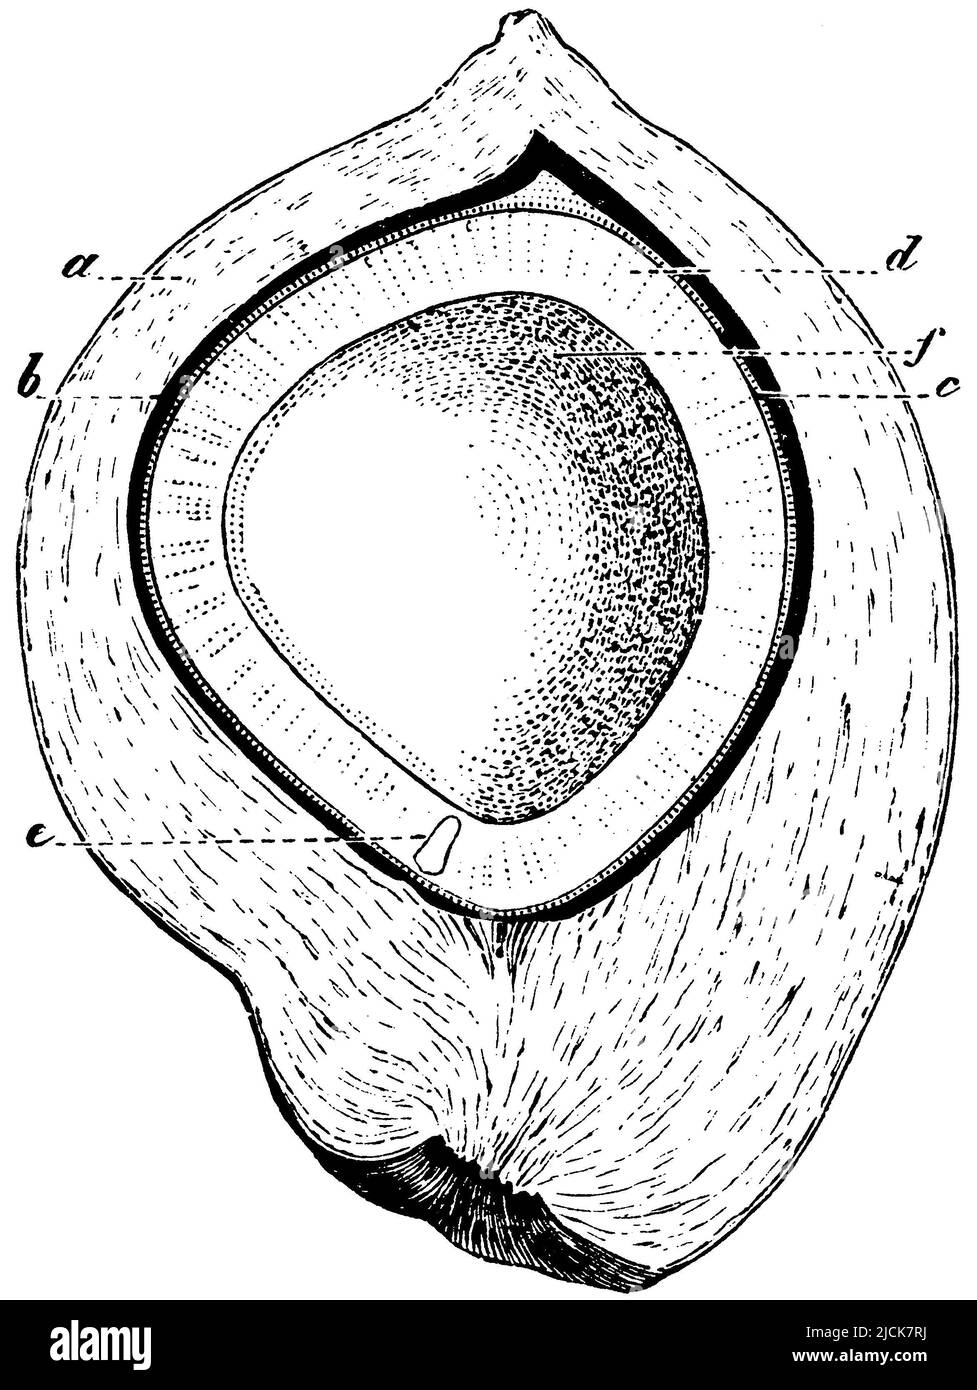 Coconut palm(a) epicarpium, (b) endocarpium, (c) seed coat, (d) seed albumen, (e) germ, (f) cavity in the seed albumen containing the milk., Cocos nucifera, anonym (botany book, 1875), Kokospalme, der Länge nach durchschnitten. a) Epicarpium, b) Endocarpium, c) Samenschale, d) Sameneiweiß, e) Keim, f) Höhle im Sameneiweiß, welche die Milch enthält, Cocotiera) épicarpe, b) endocarpe, c) tégument, d) albumen, e) germe, f) cavité dans l'albumen contenant le lait. Stock Photo